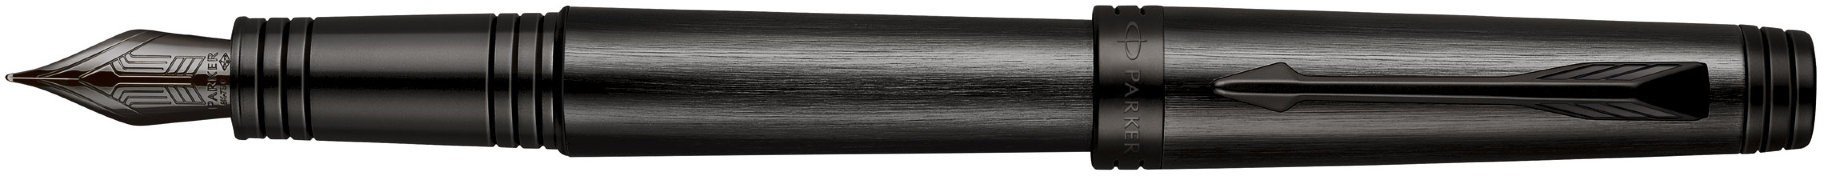 Перьевая ручка Parker Premier F563, Black Edition 2010